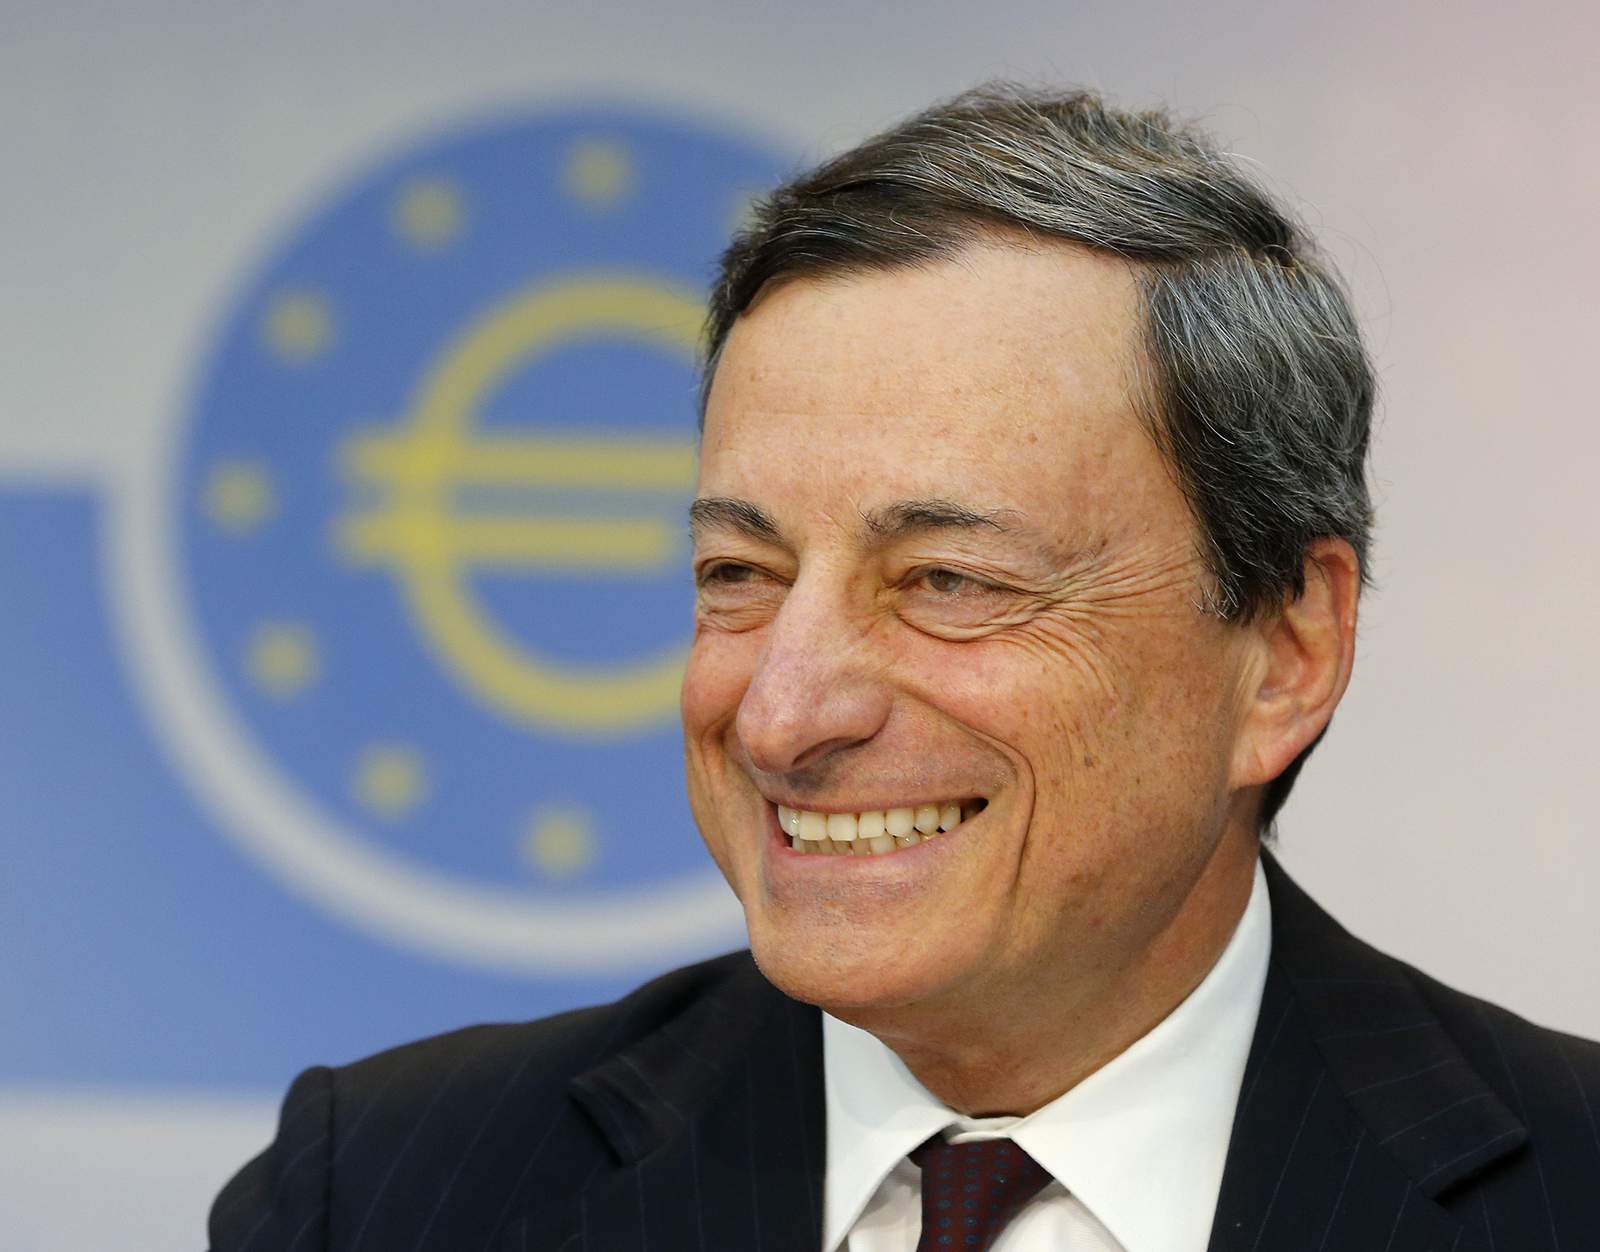 Draghi brings market savvy, gravitas to tame Italy's crises